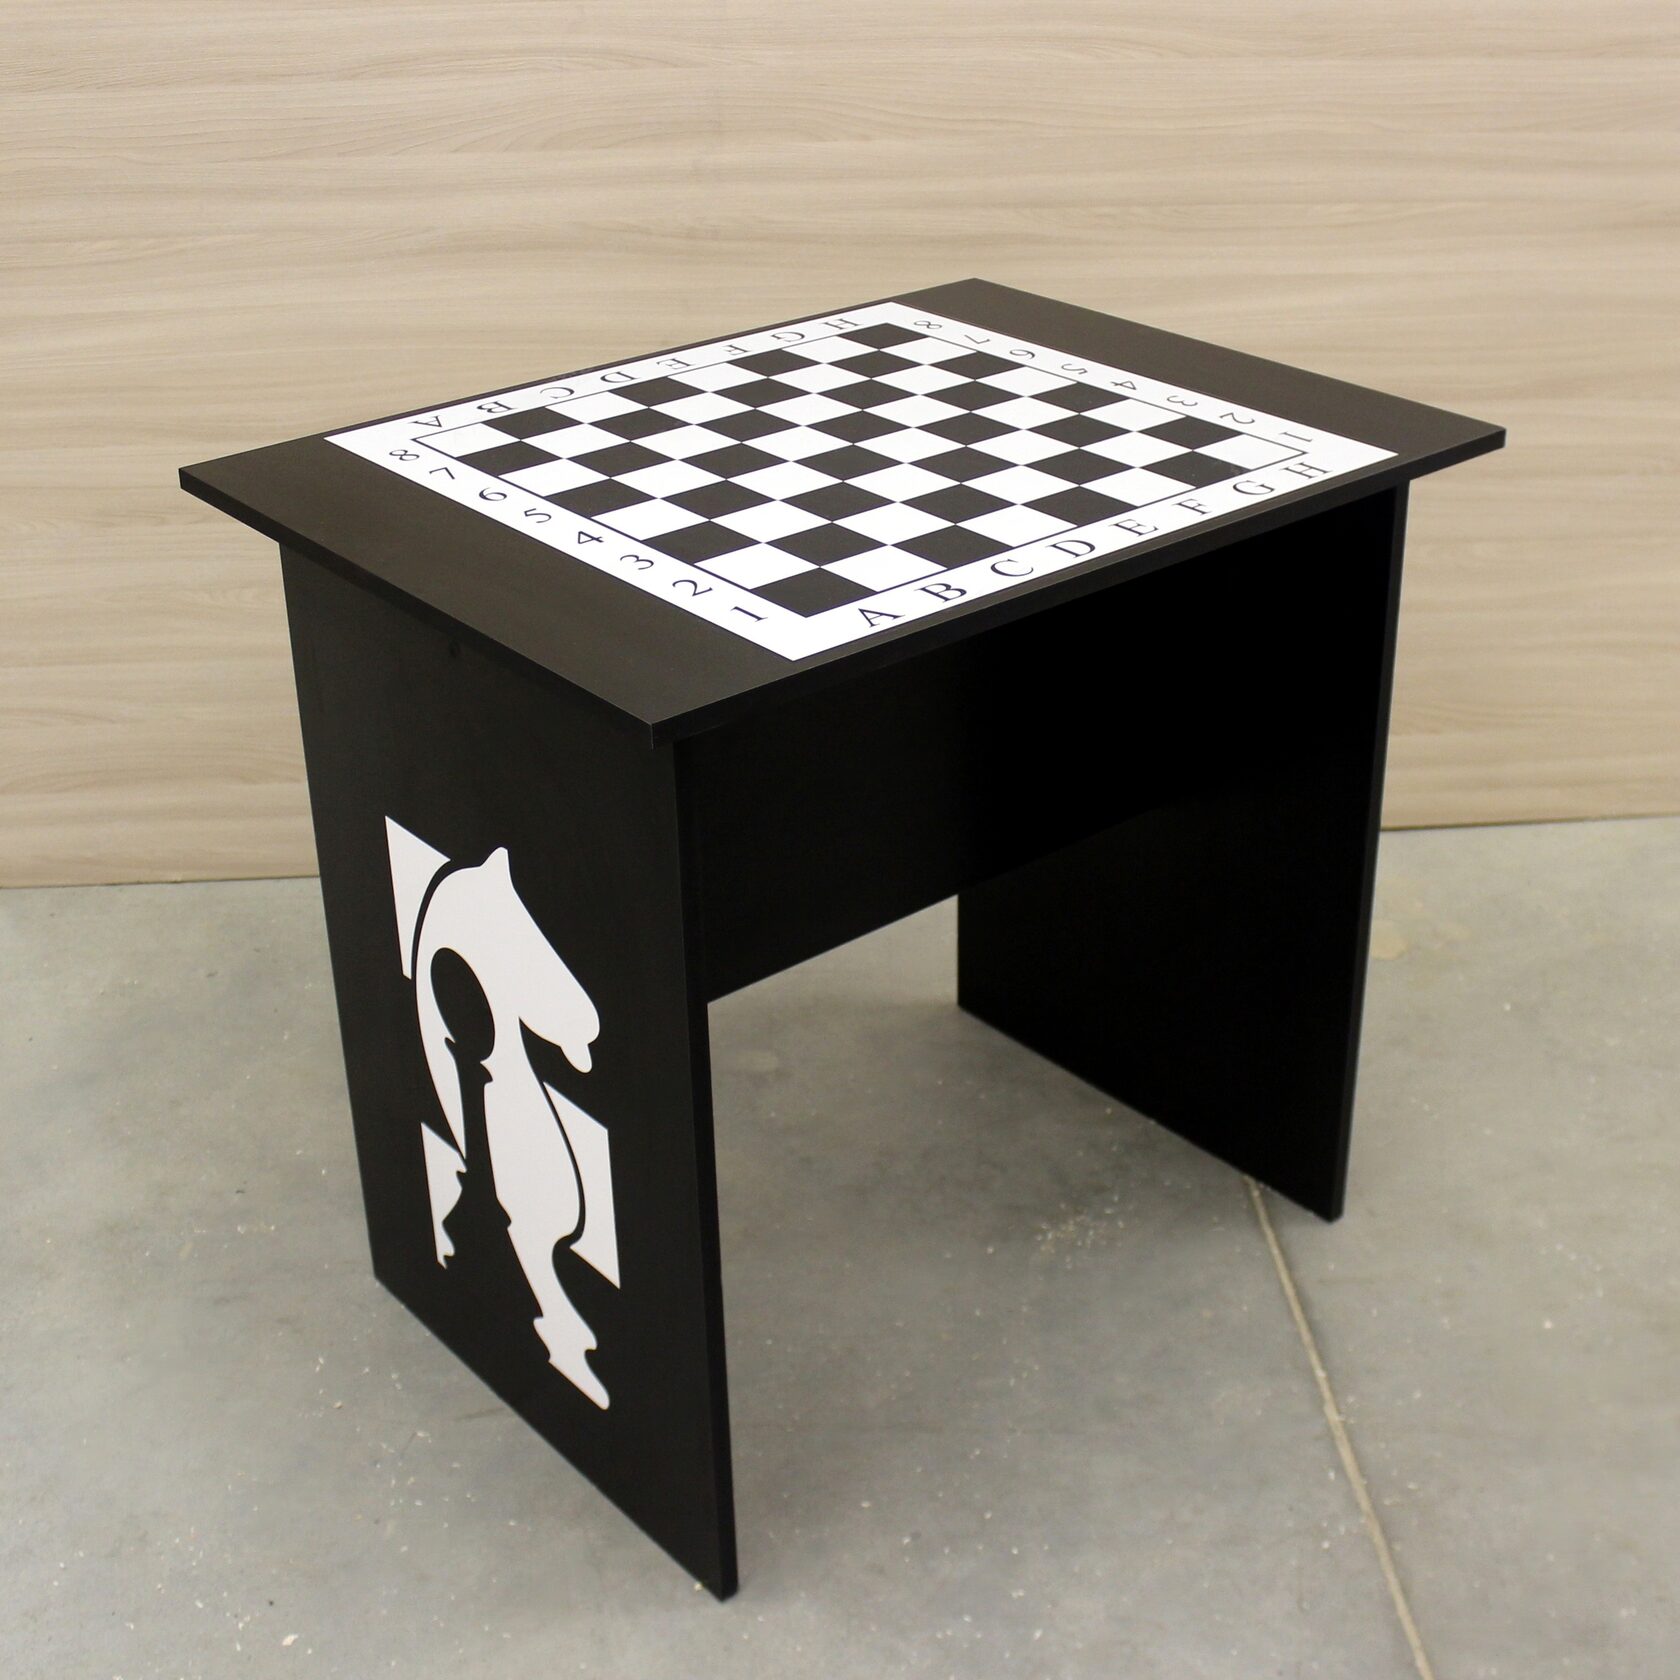 стол в виде шахматной доски